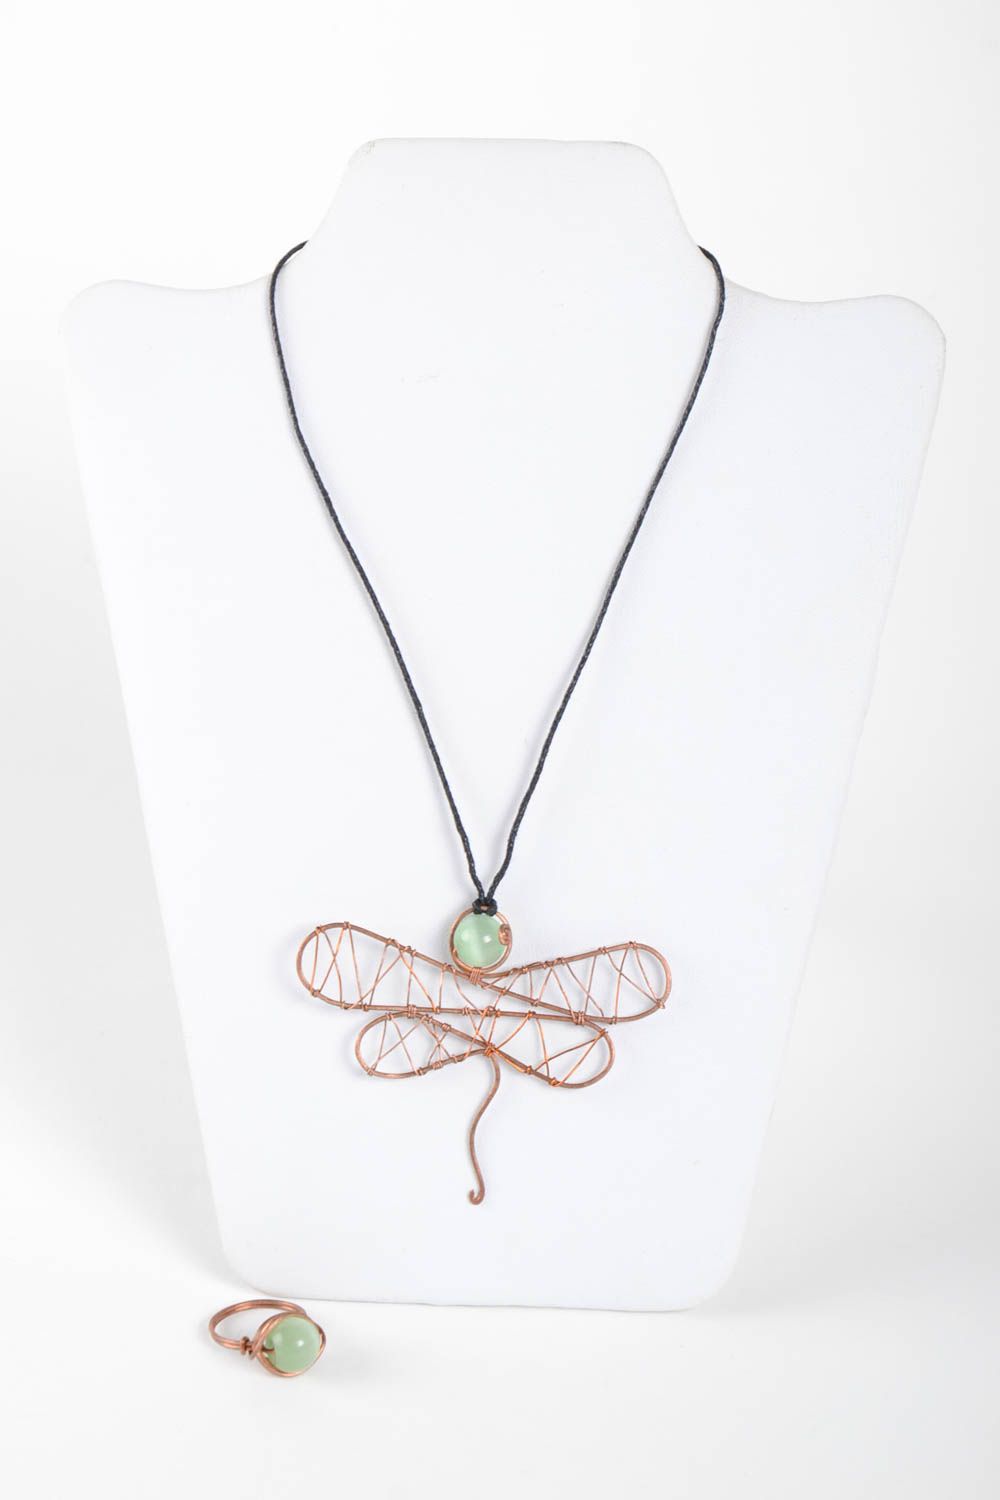 Unusual handmade metal ring metal pendant wire wrap ideas costume jewelry set photo 2